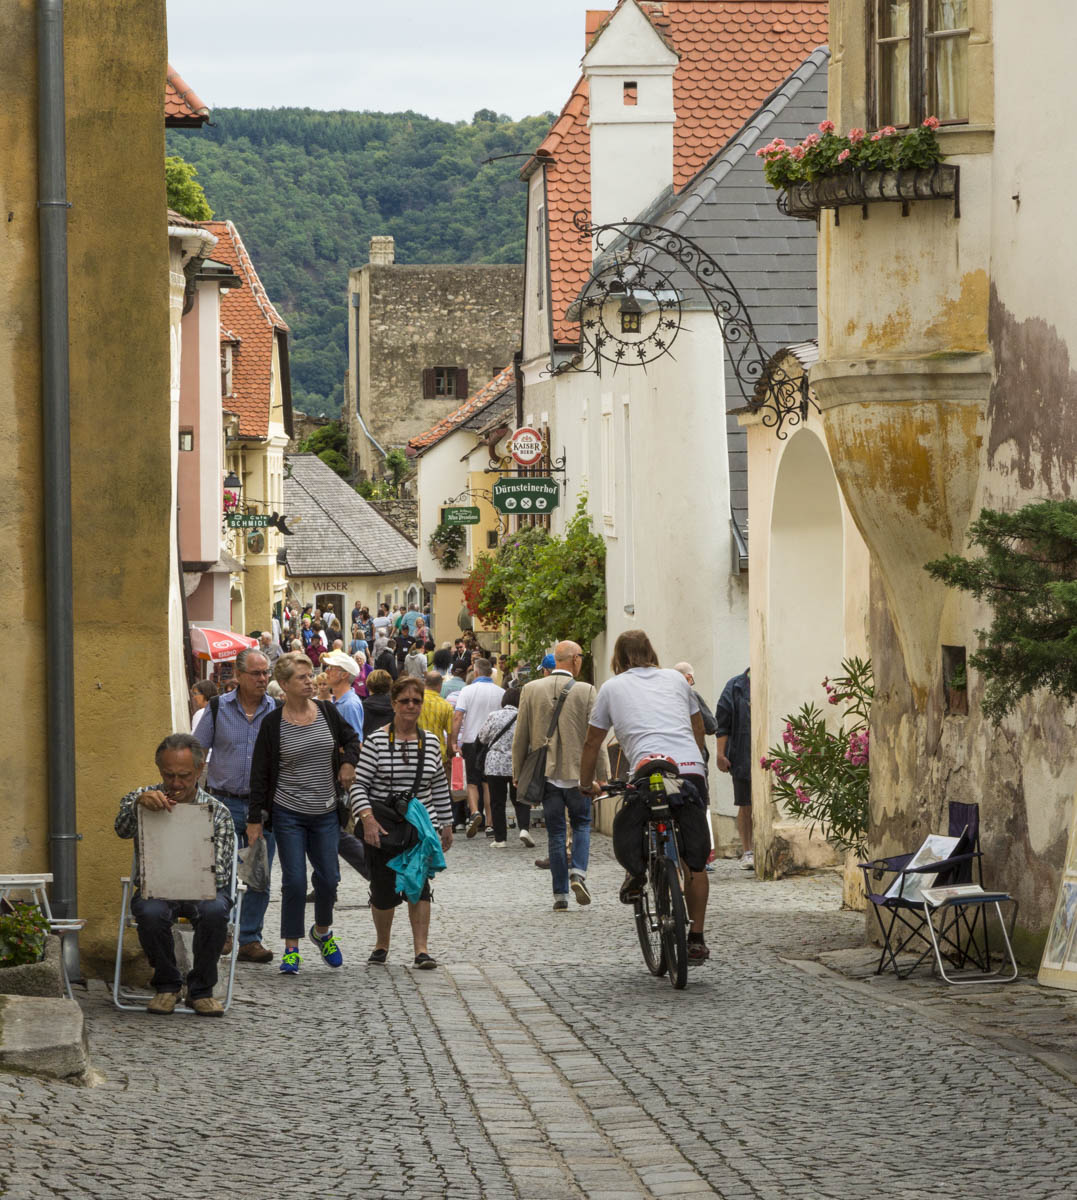 Walking the cobblestone streets of Durnstein